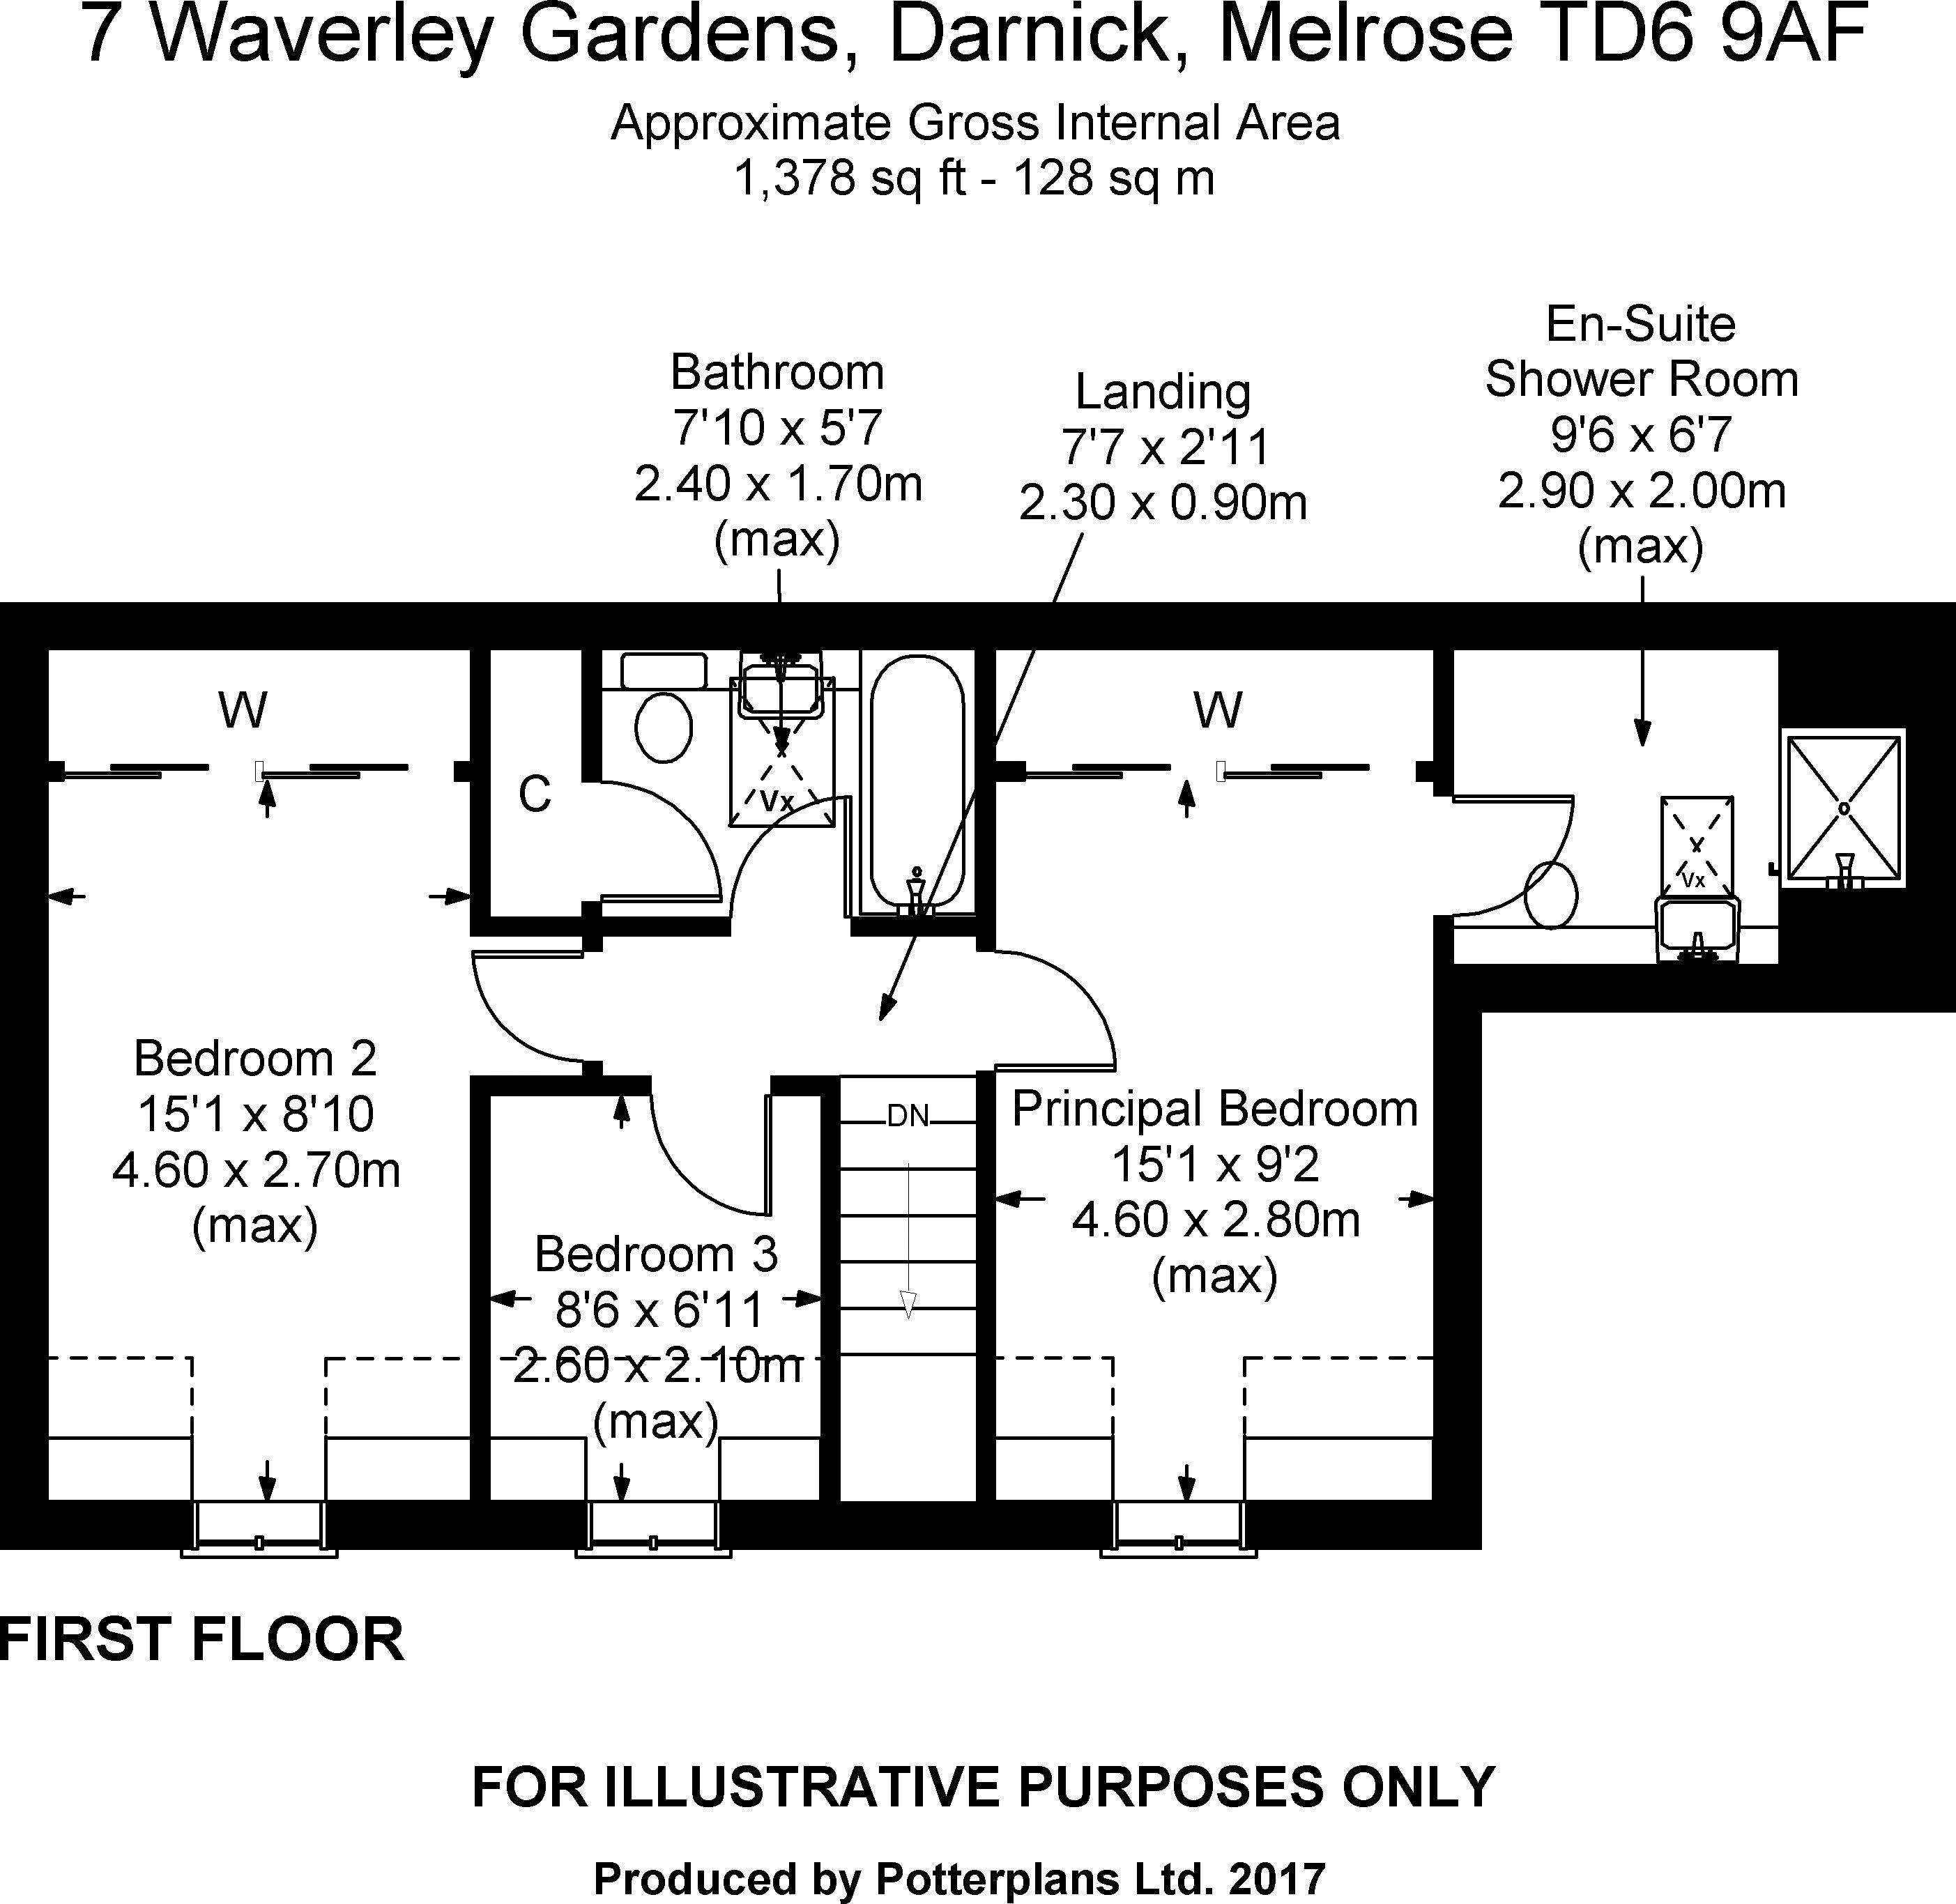 7 Waverley Gardens First Floor